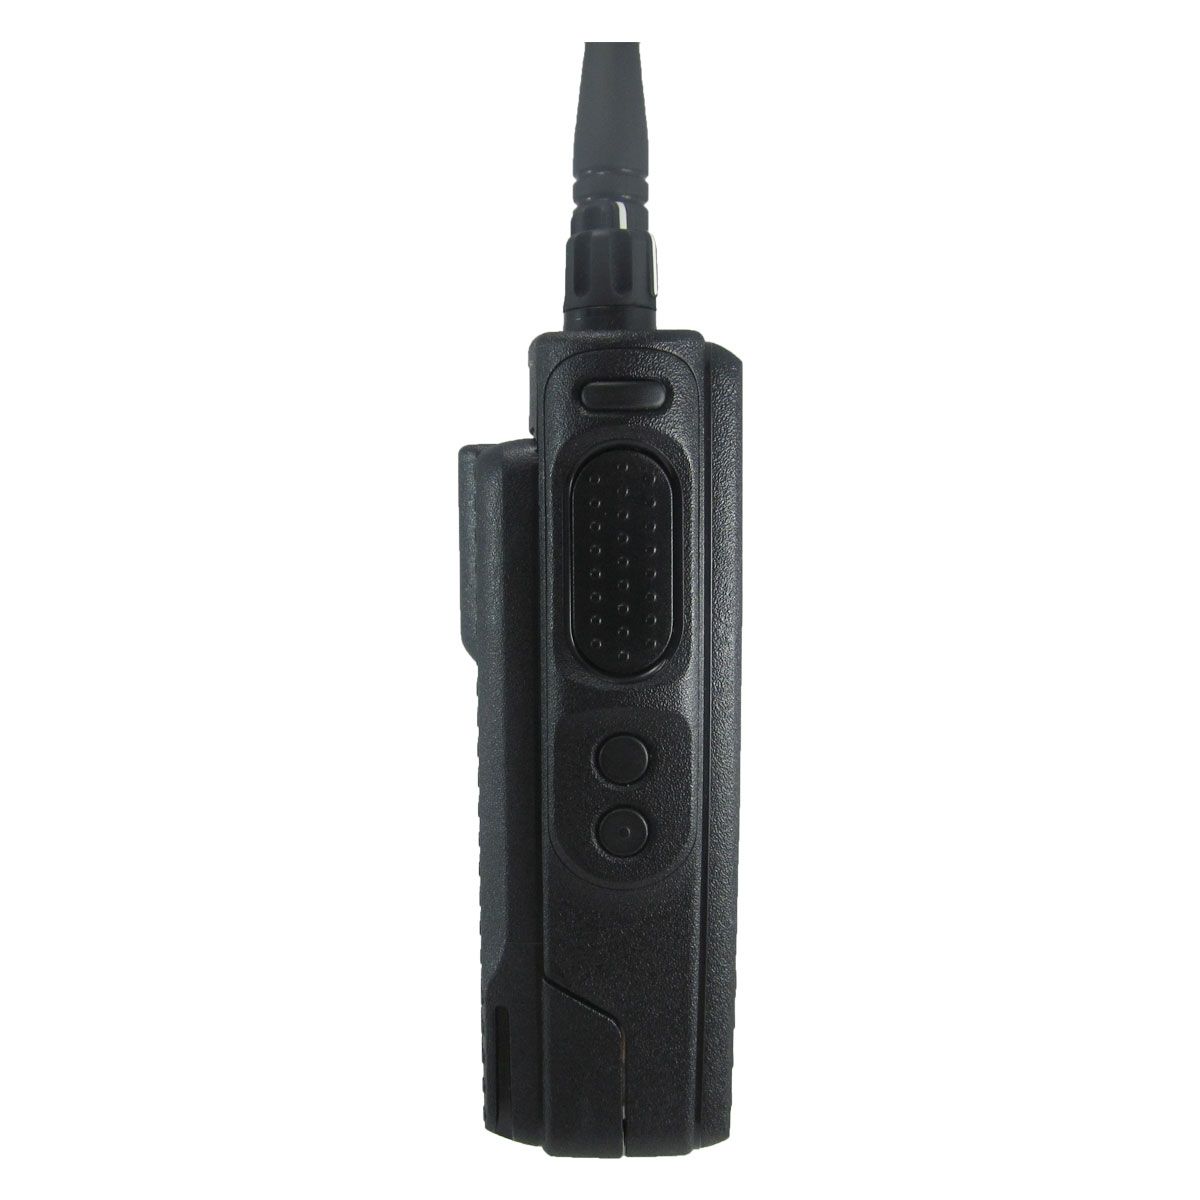 Radio Motorola DGP8550 Digital LAH56JDN9KA1AN VHF 136-174 MHz